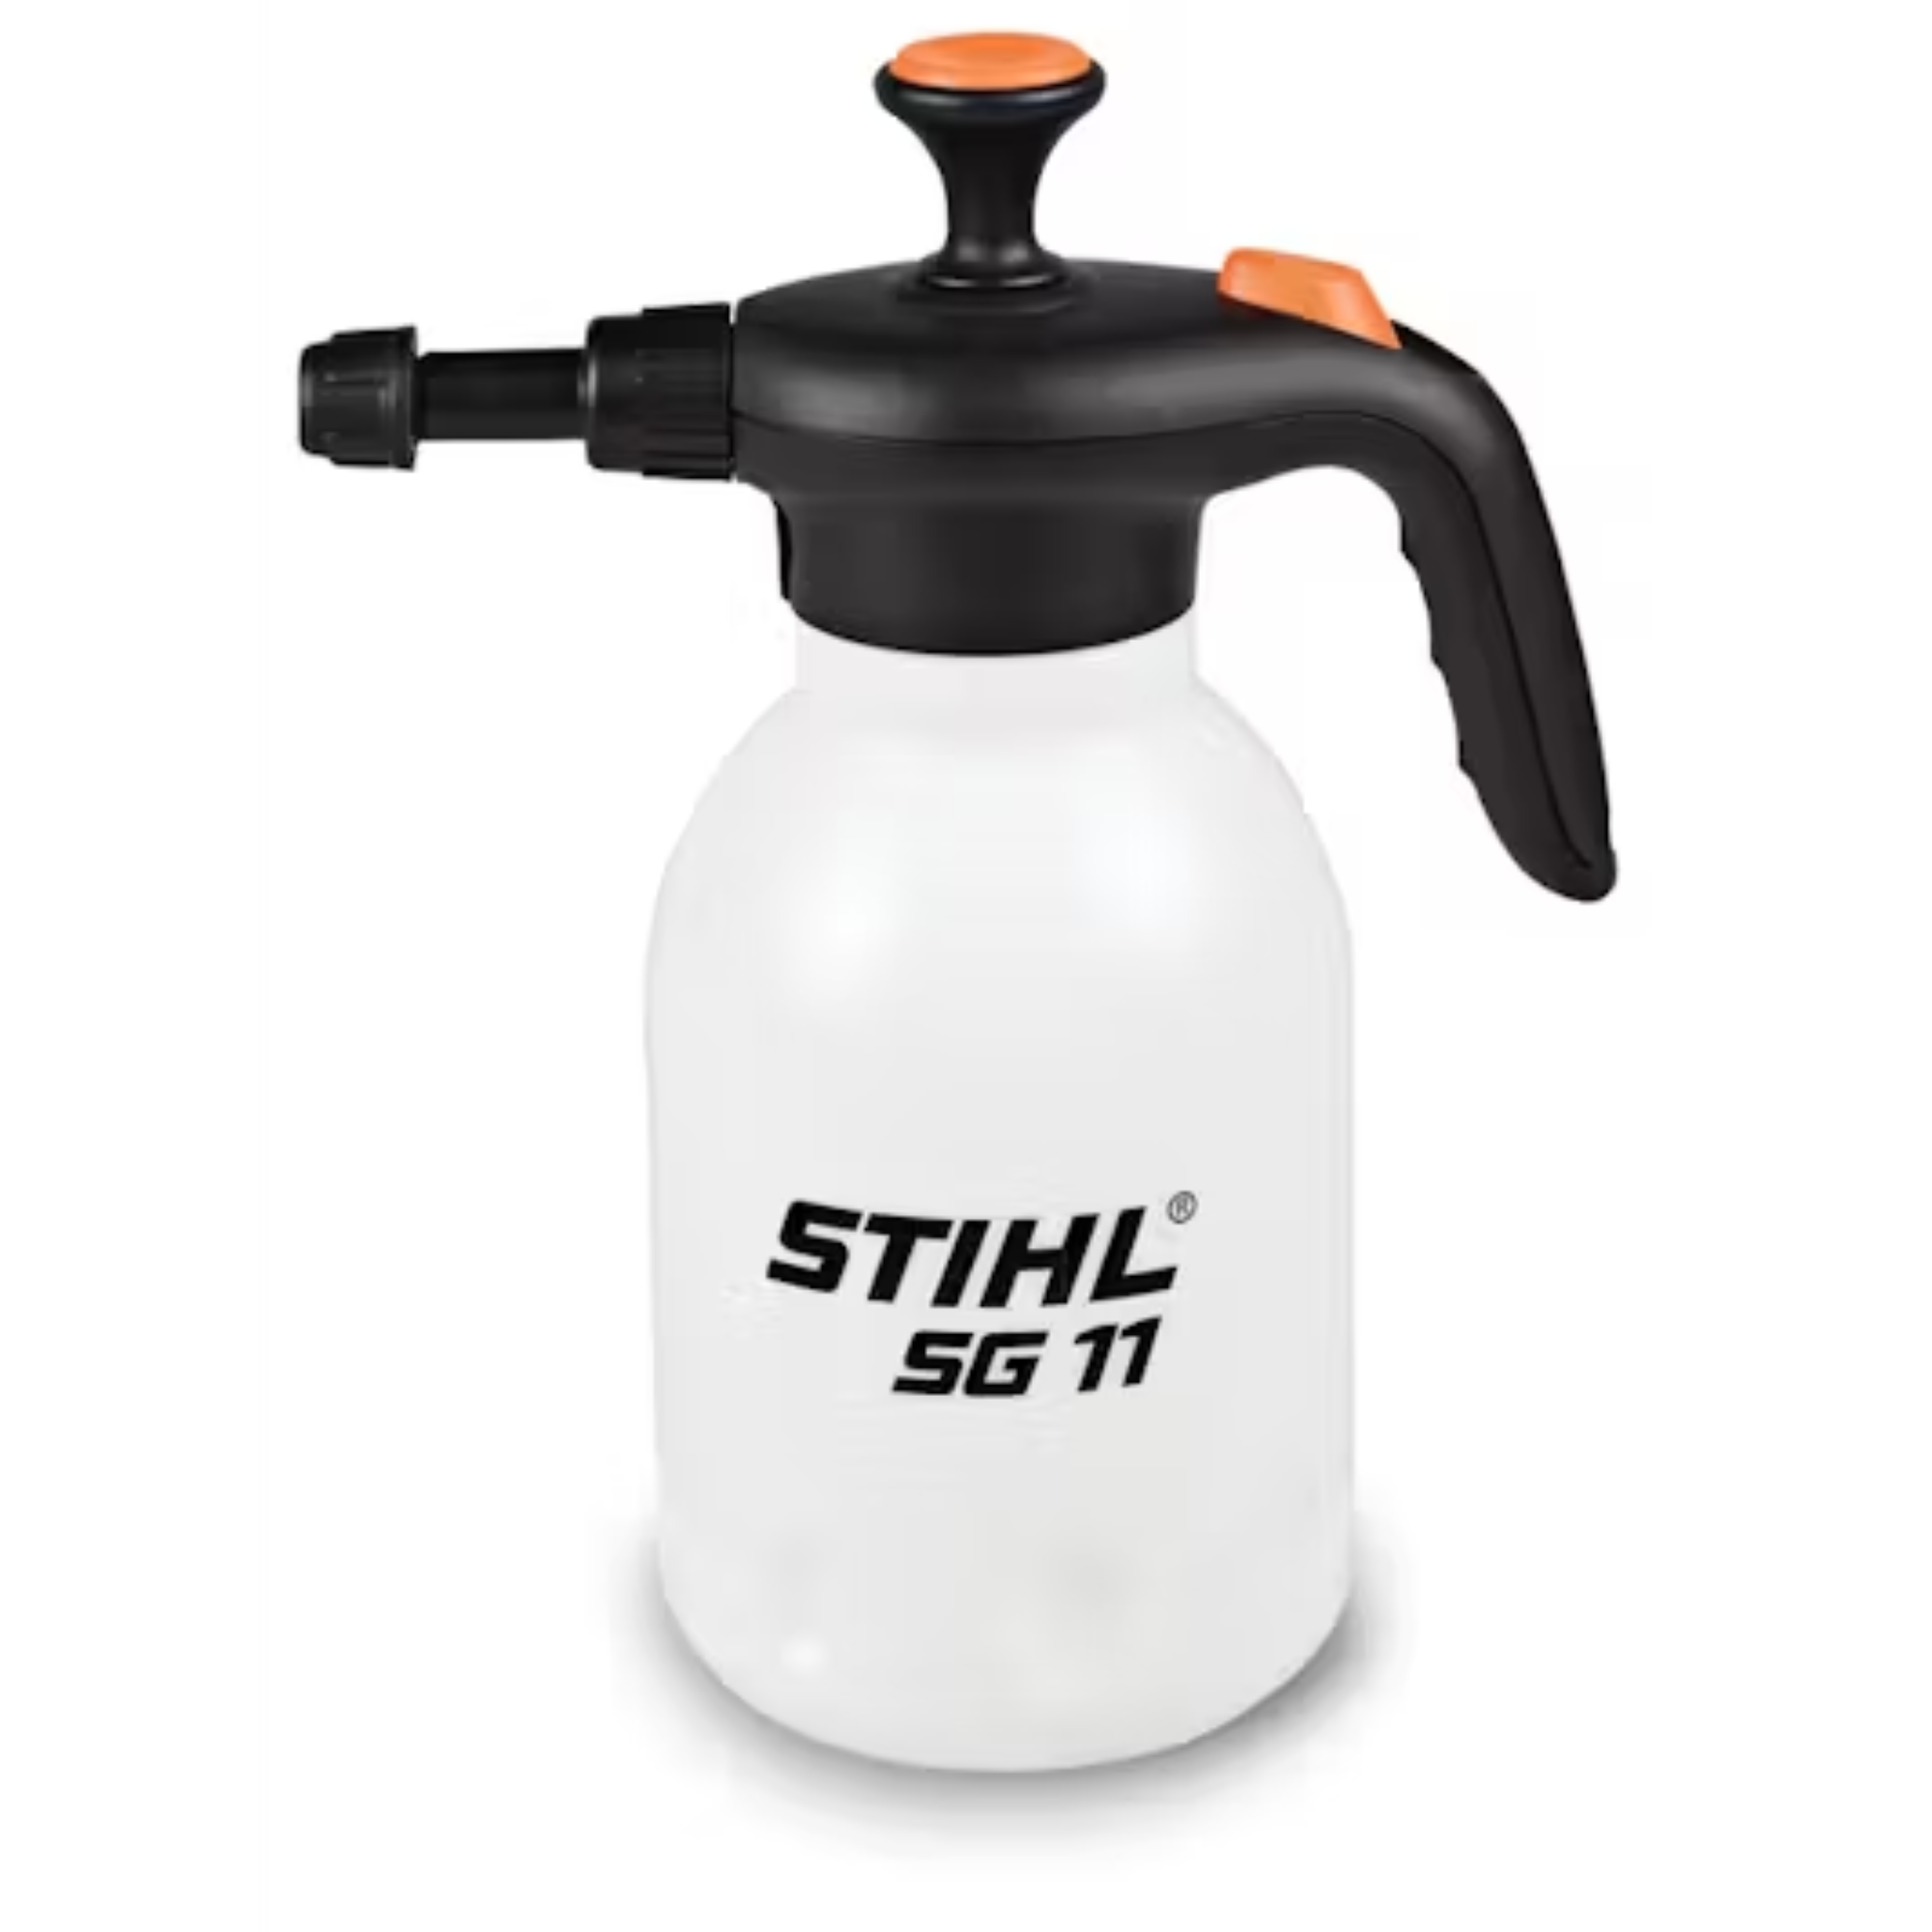 Stihl SG 11 Handheld Sprayer